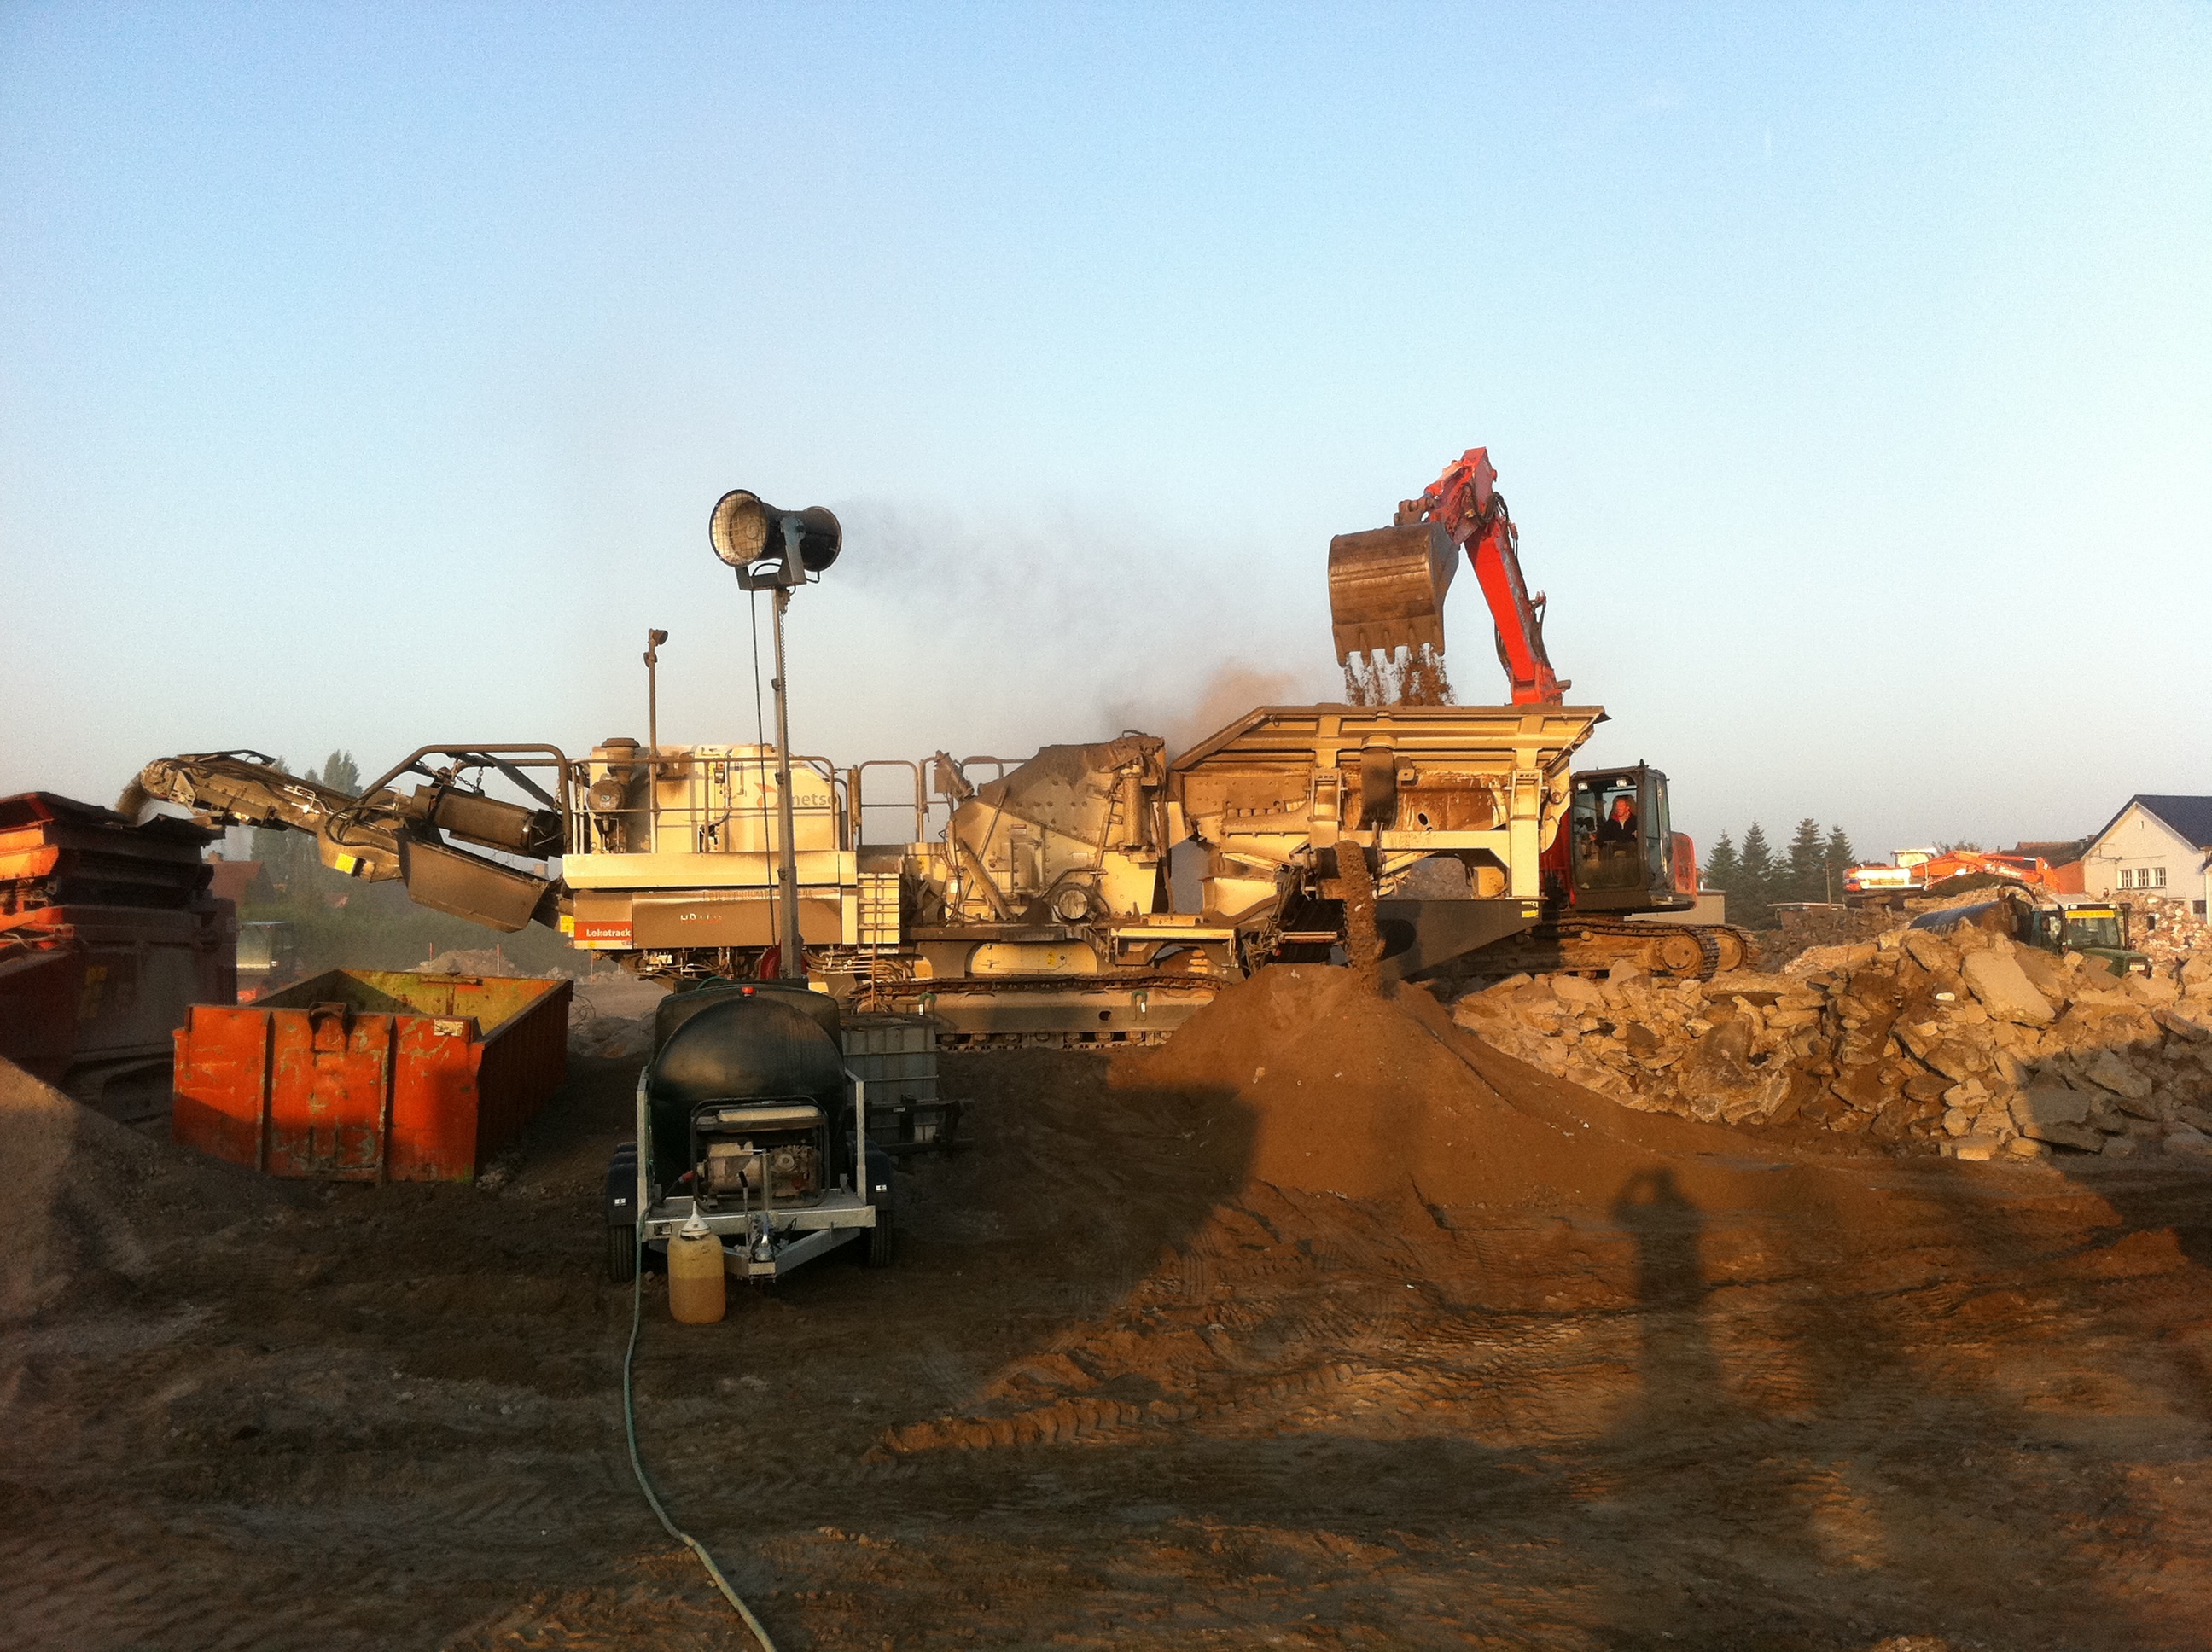 000 soil remediation cannon S2 2 SS dust 02